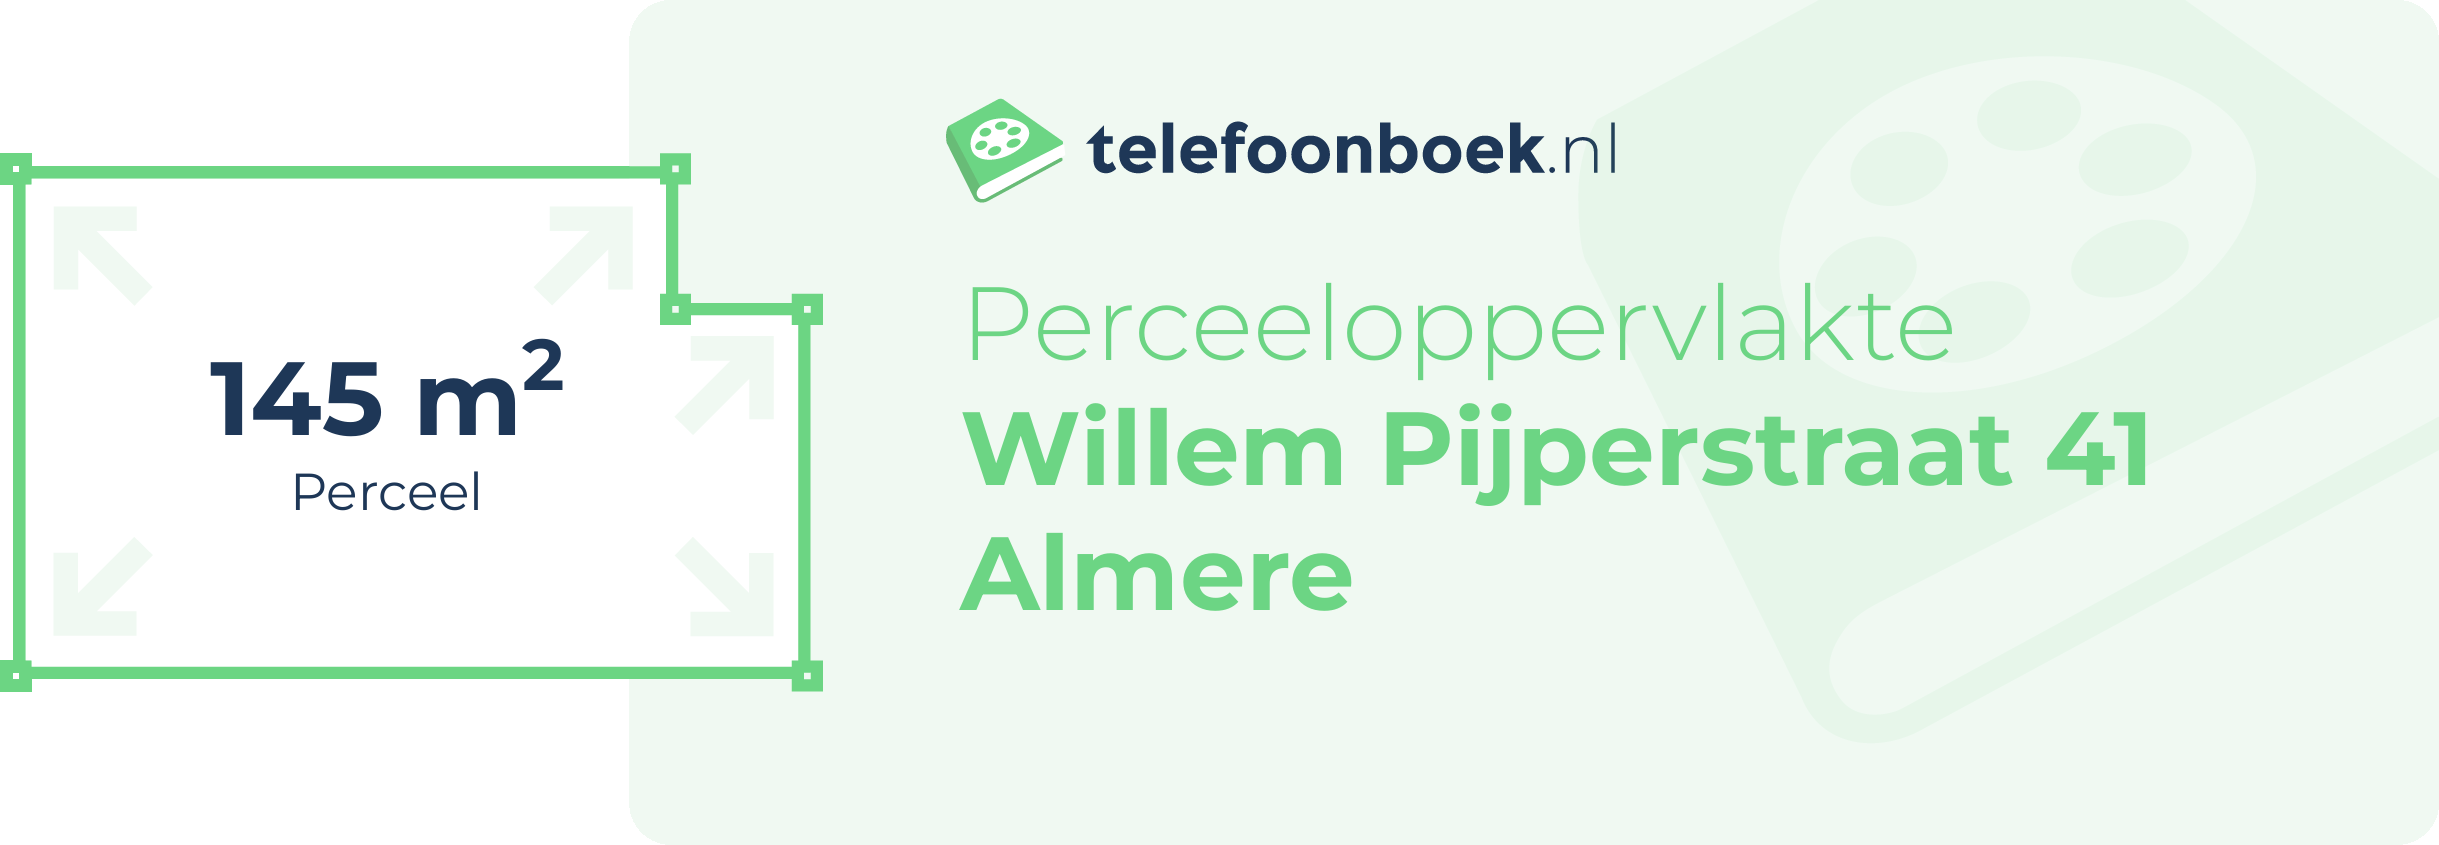 Perceeloppervlakte Willem Pijperstraat 41 Almere